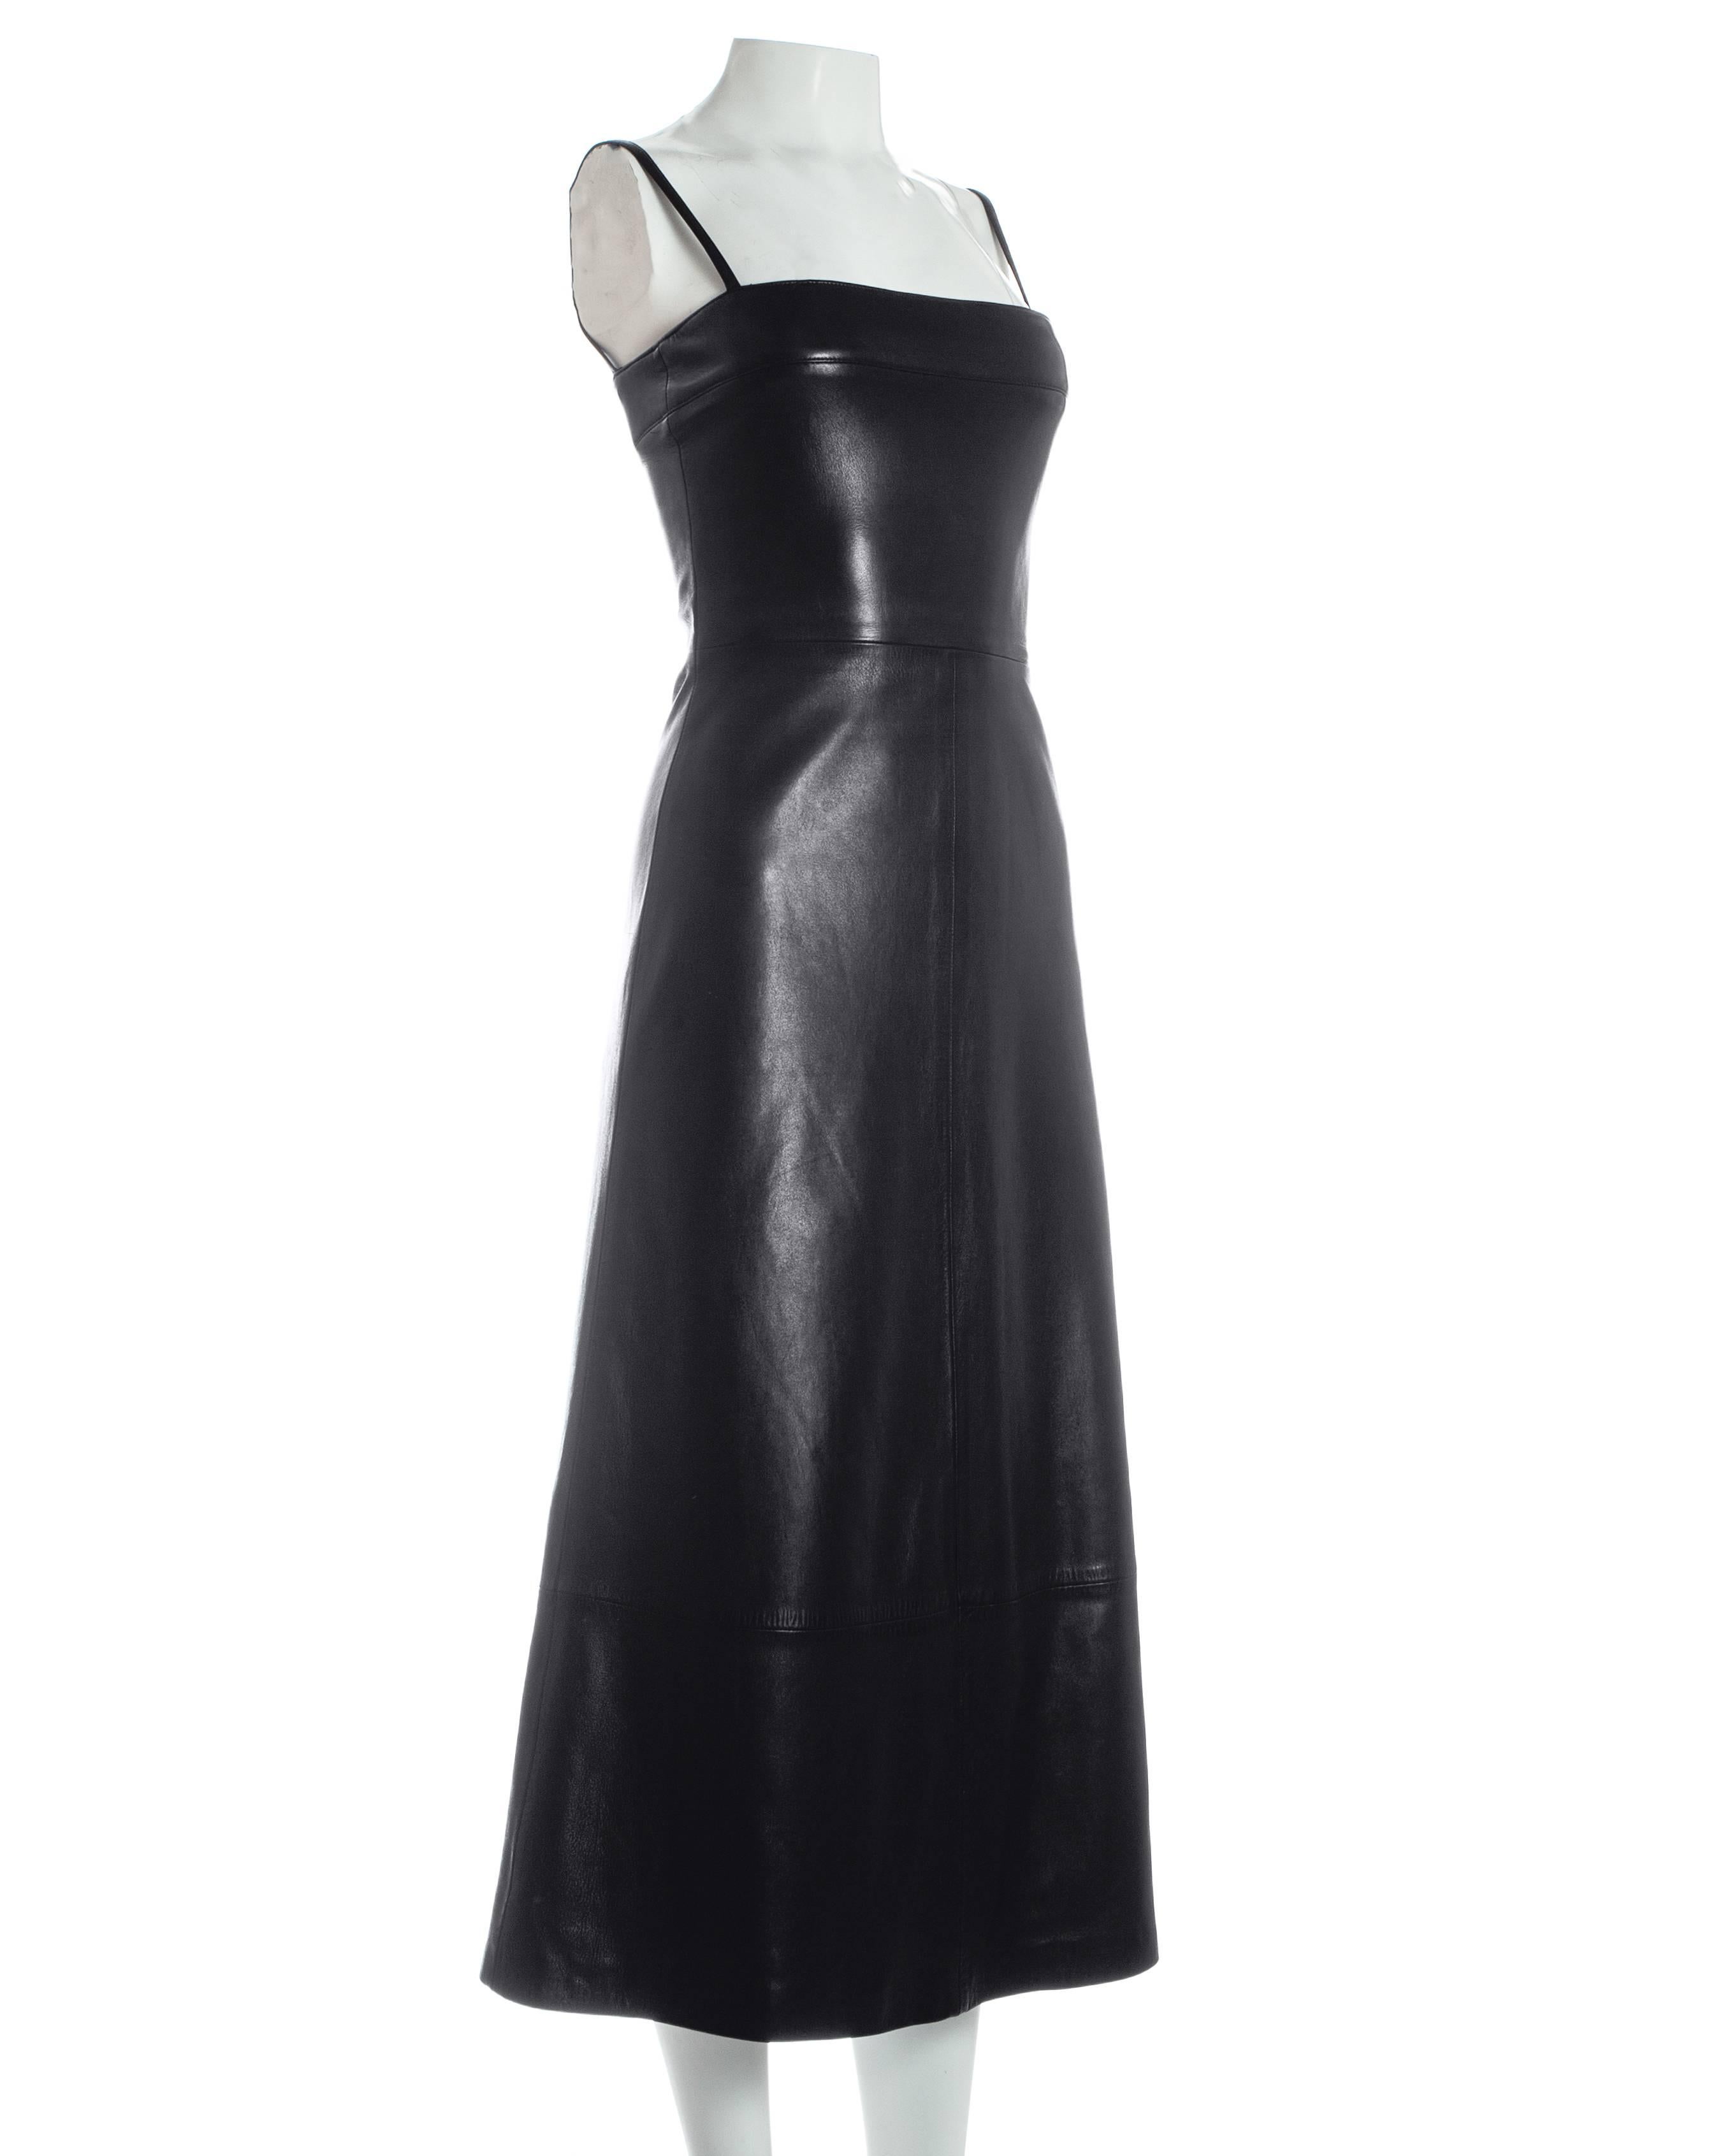 Black Gianni Versace black lambskin leather A-line ankle length dress, circa 1998